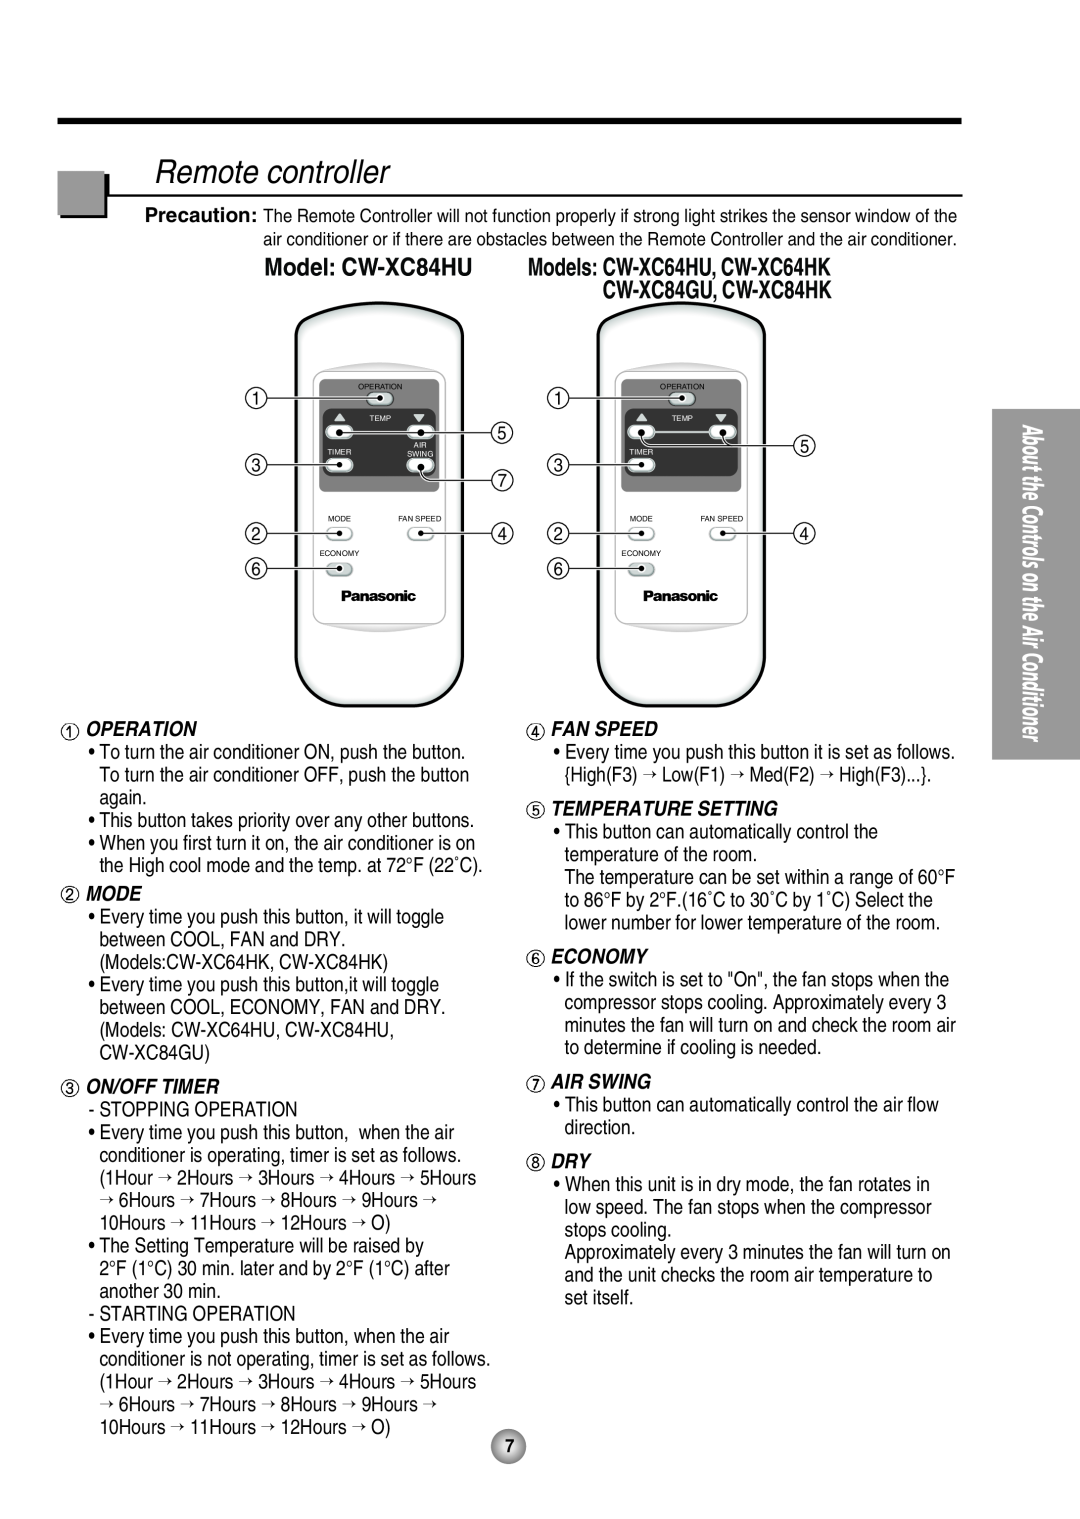 Panasonic CW-XC64HU manual Remote controller, Model: CW-XC84HU, Air Swing, Operation, On/Off Timer, Fan Speed, Economy 